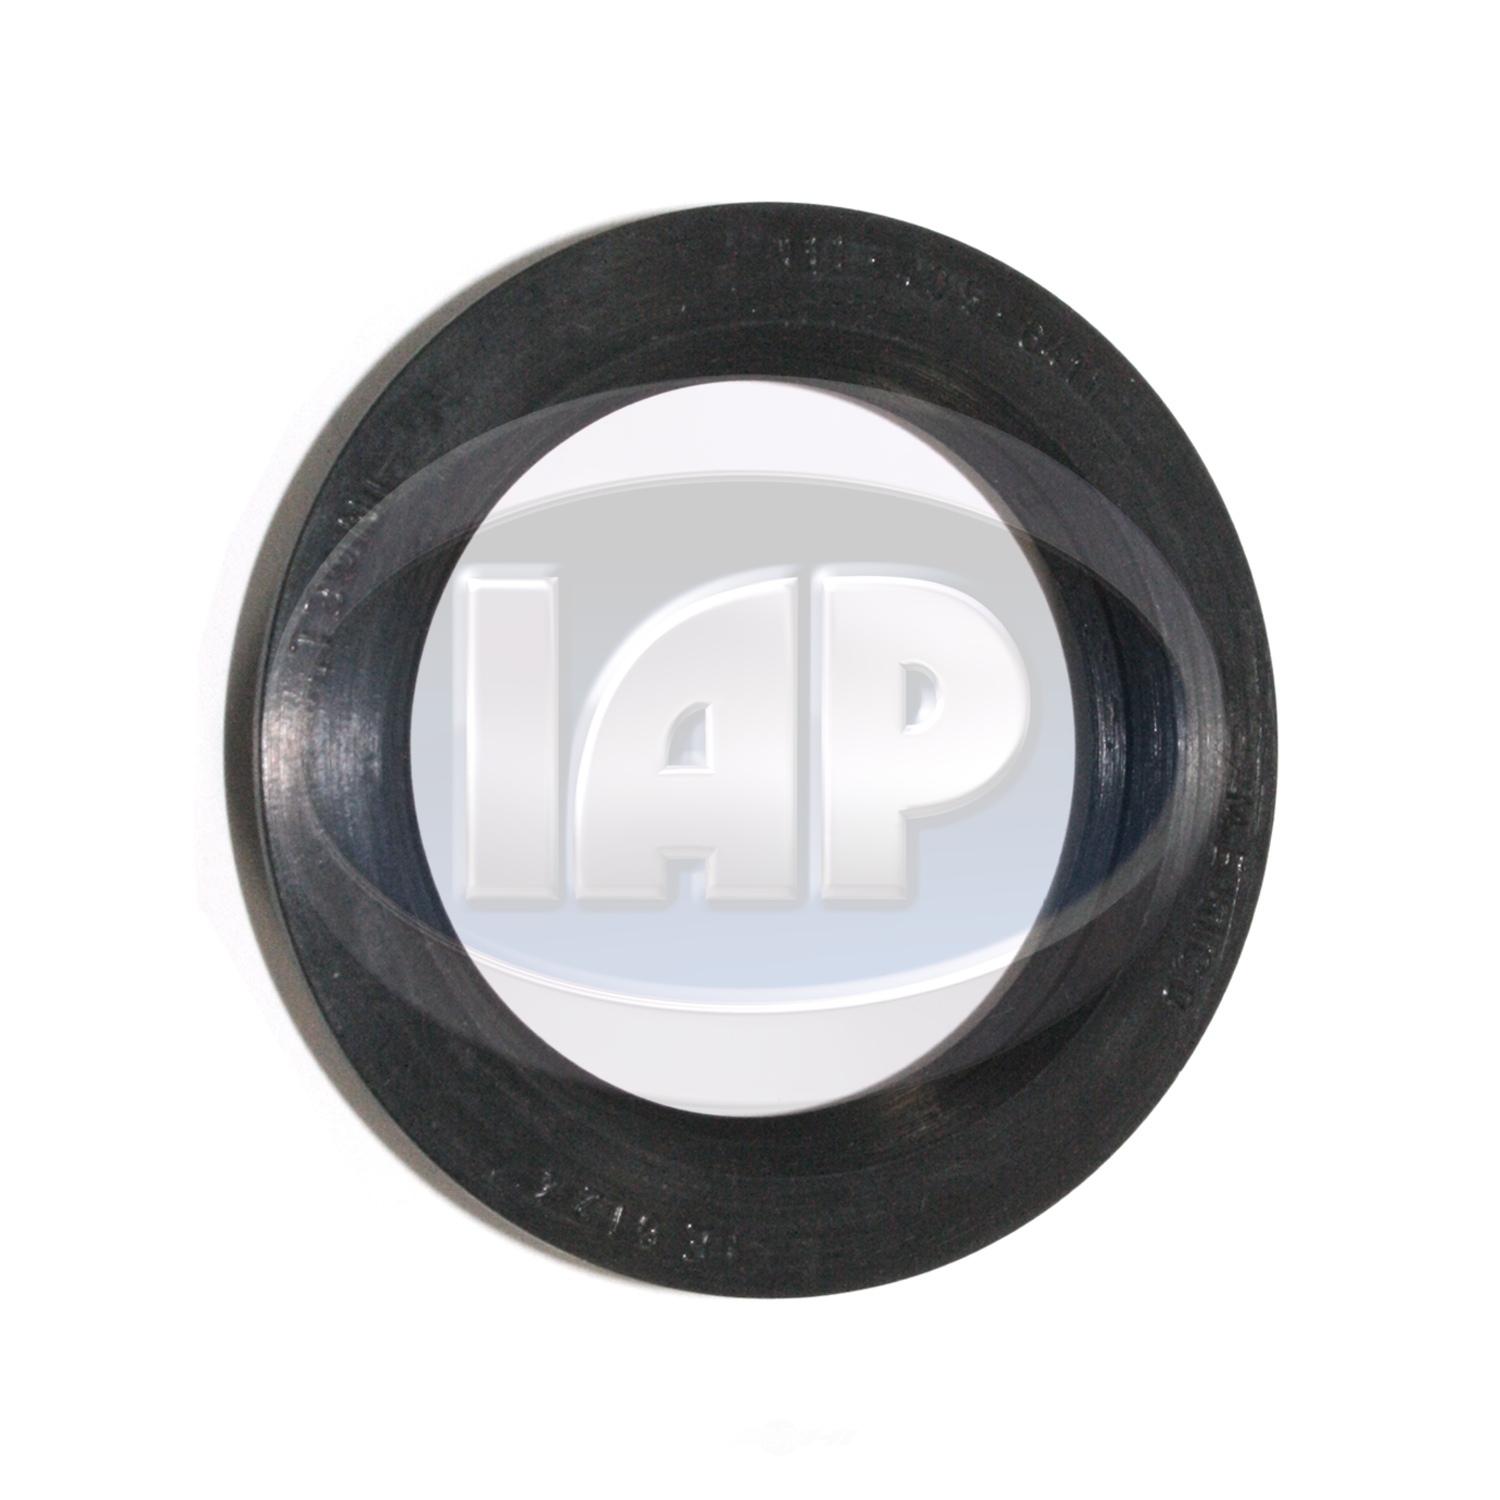 IAP/KUHLTEK MOTORWERKS - Wheel Seal (Front Right) - KMS 111405641B